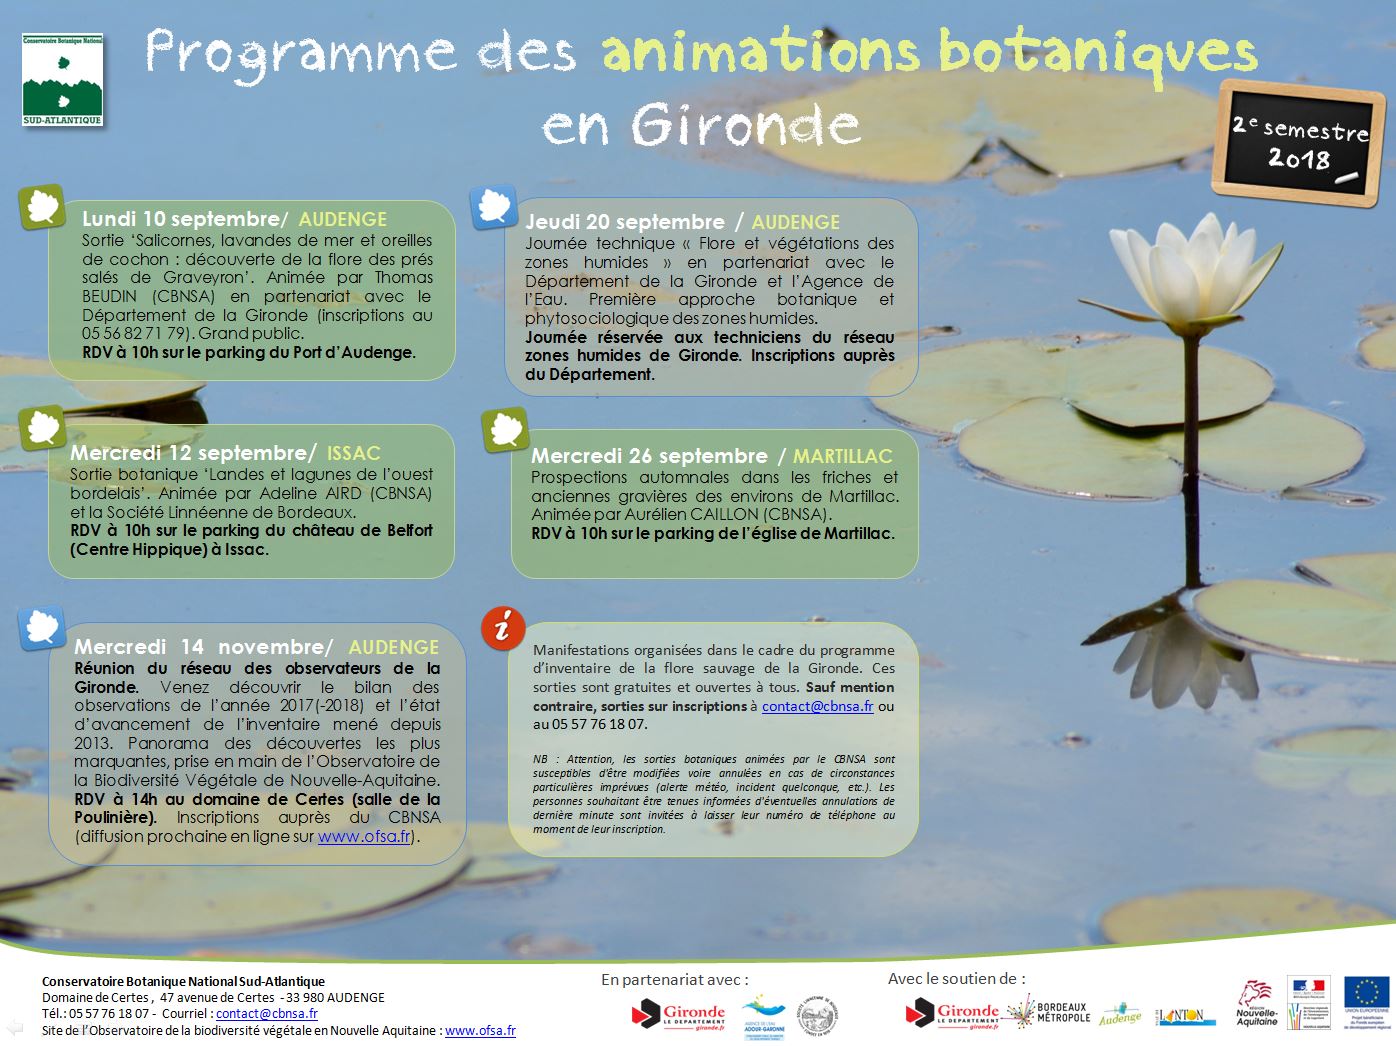 Programme des animations botaniques en Gironde - Automne 2018 jpg